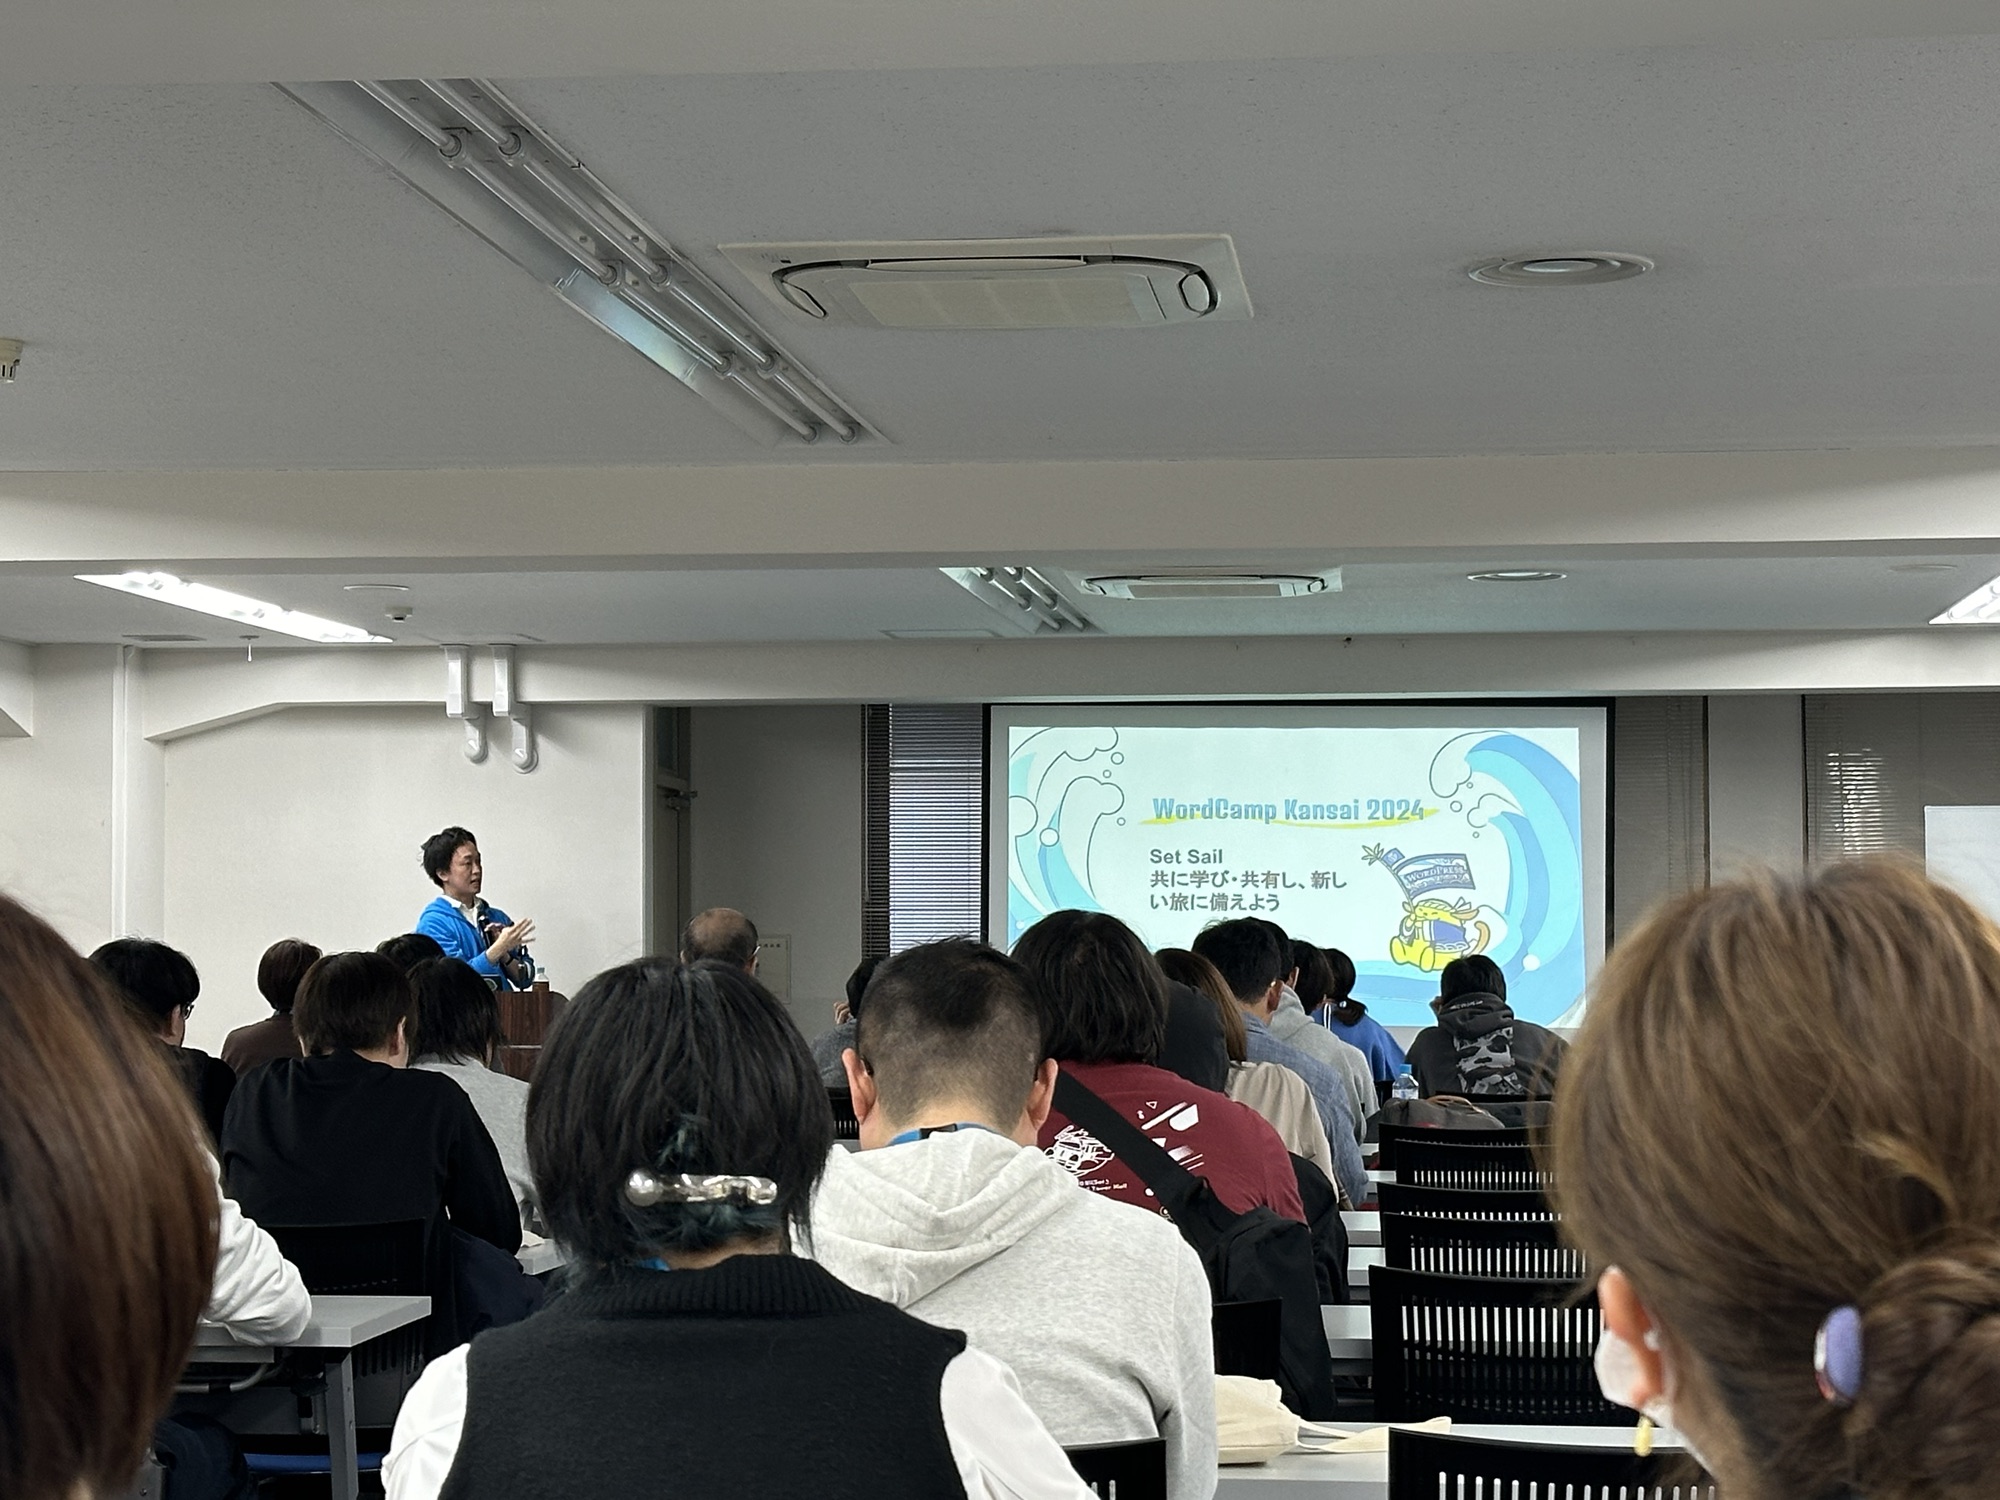 WordCamp Kansai 2024: 続いていくことと新しいこと、コミュニティの担う意味。#WCKansai